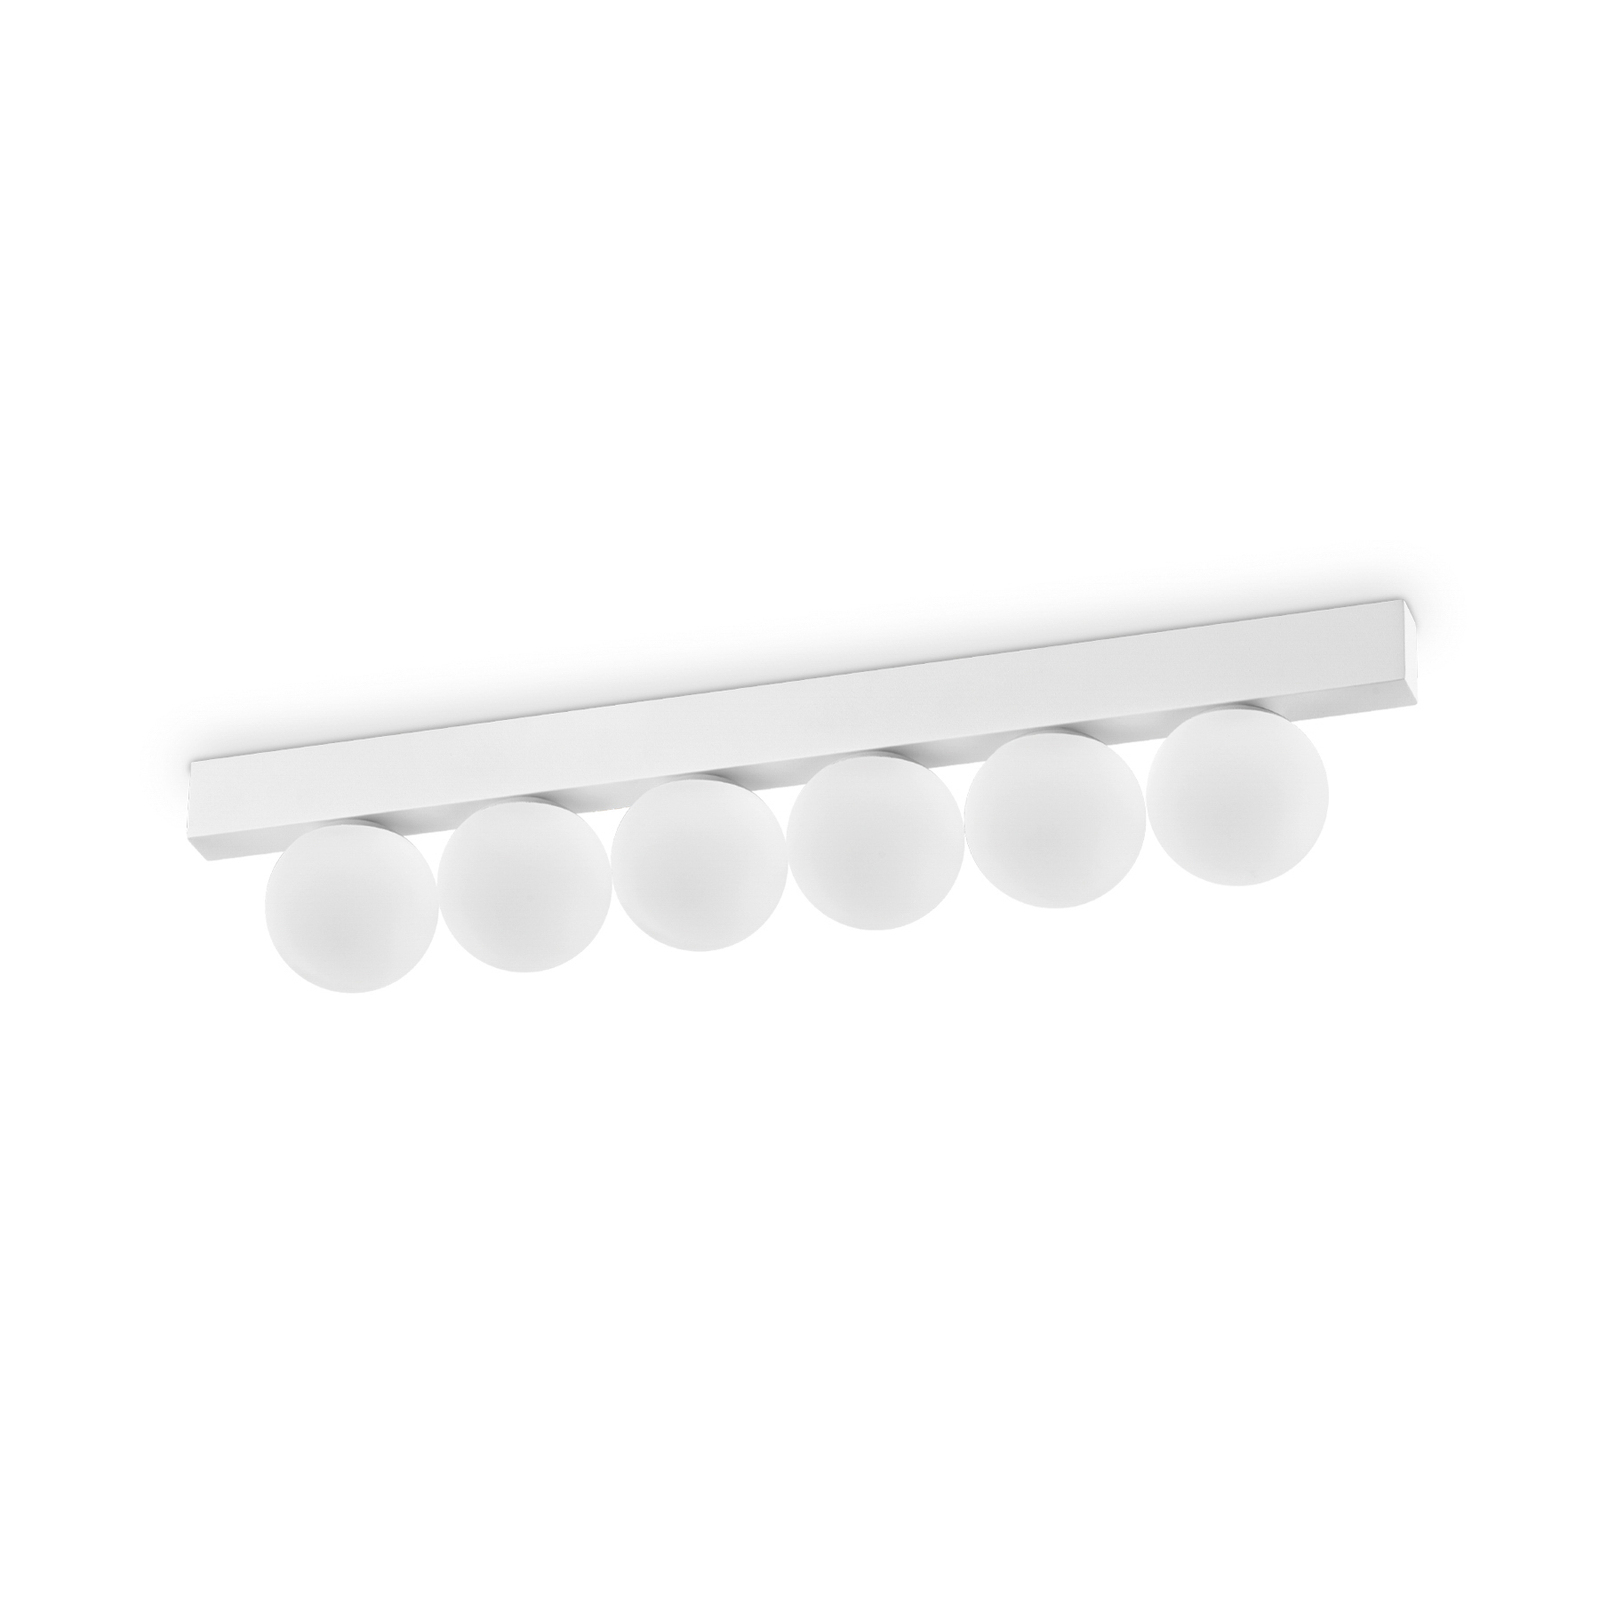 Stropné svietidlo Ideal Lux LED Ping Pong biele 6 svetiel, opálové sklo